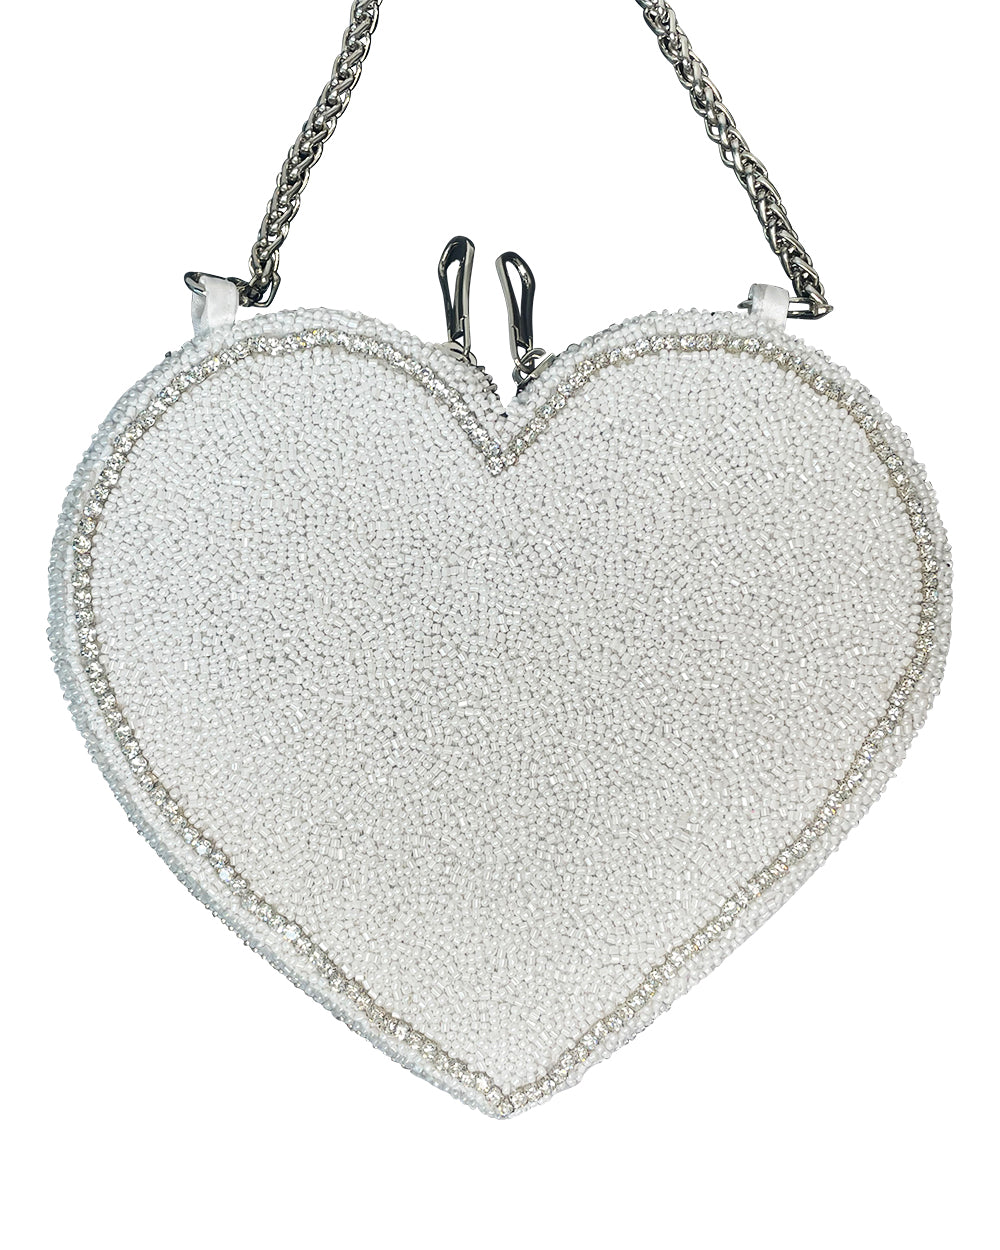 HEART BRIDAL BAG WHITE AND DIAMONTE